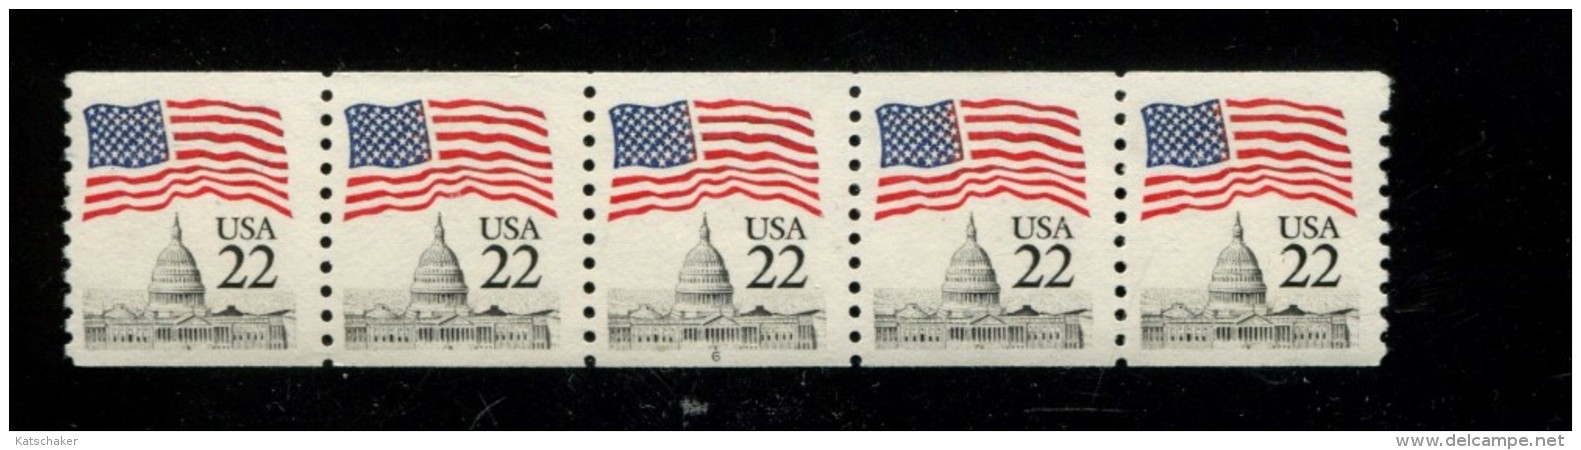 USA POSTFRIS MINT NEVER HINGED POSTFRISCH EINWANDFREI SCOTT 2115 Plate 6 - Rollenmarken (Plattennummern)